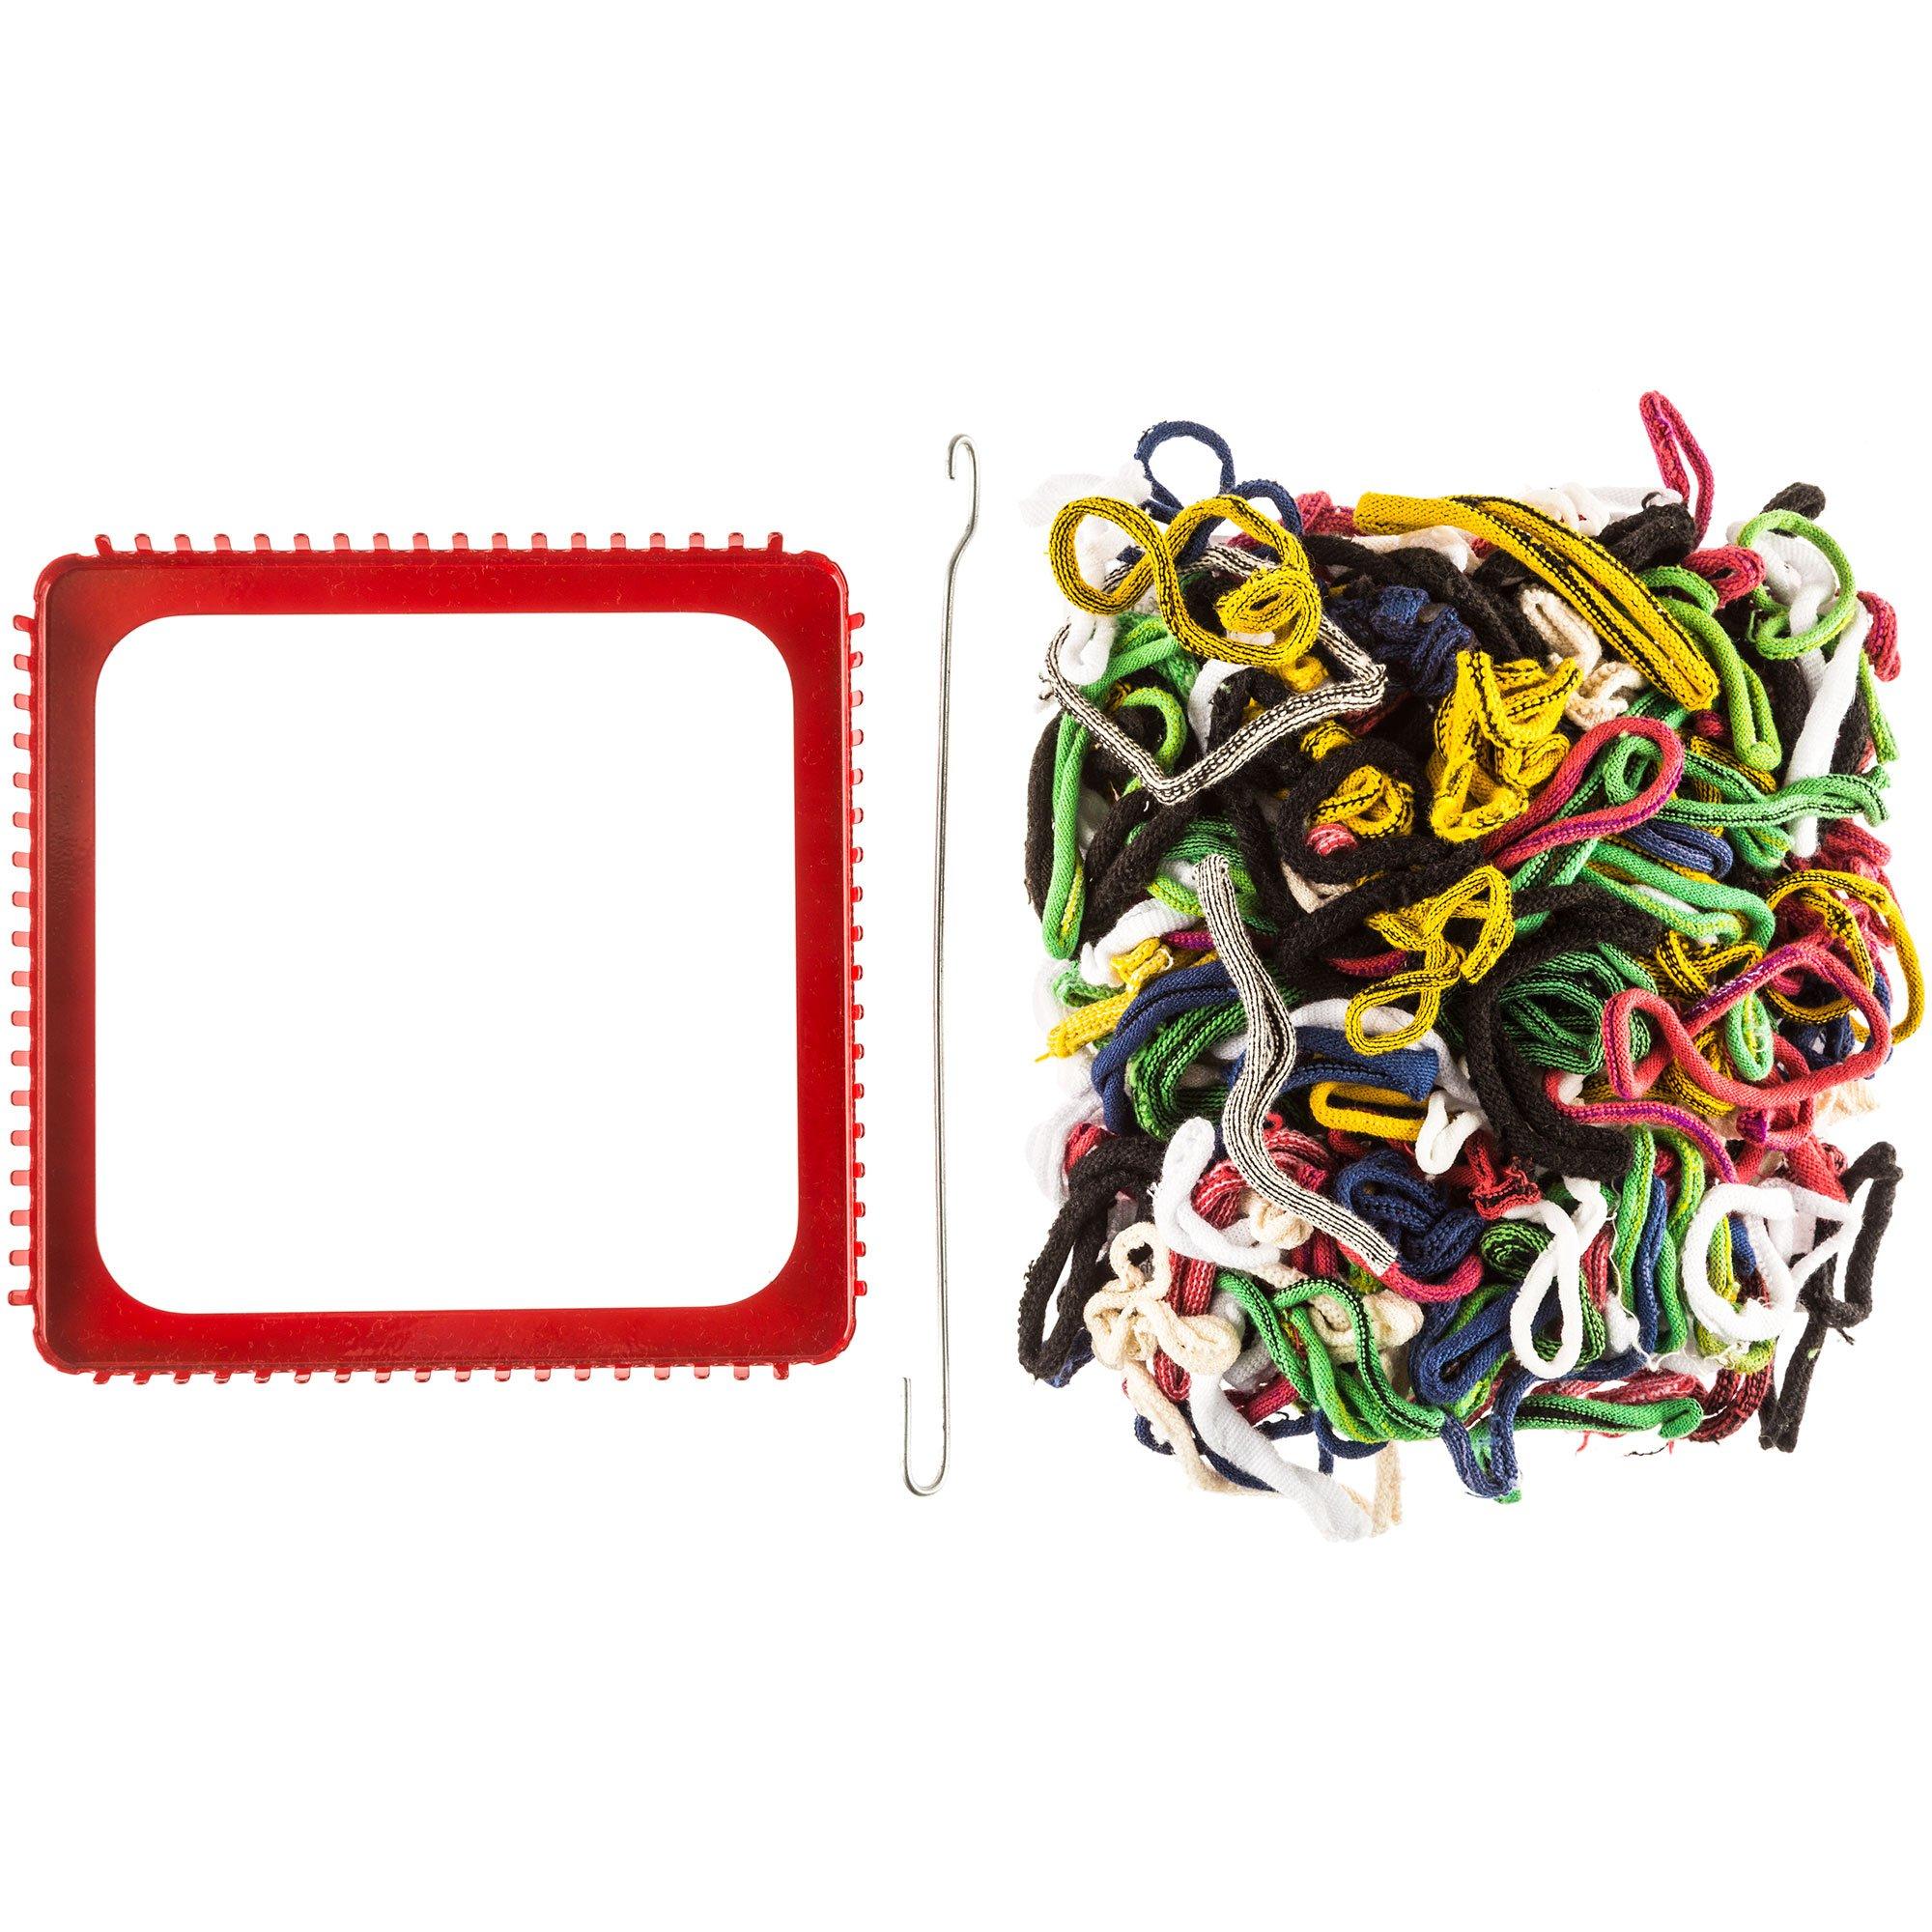  Schylling Metal Pot Holder Loom Kit & 40 Loop Refills Gift Set  Bundle (Colors May Vary) : Toys & Games